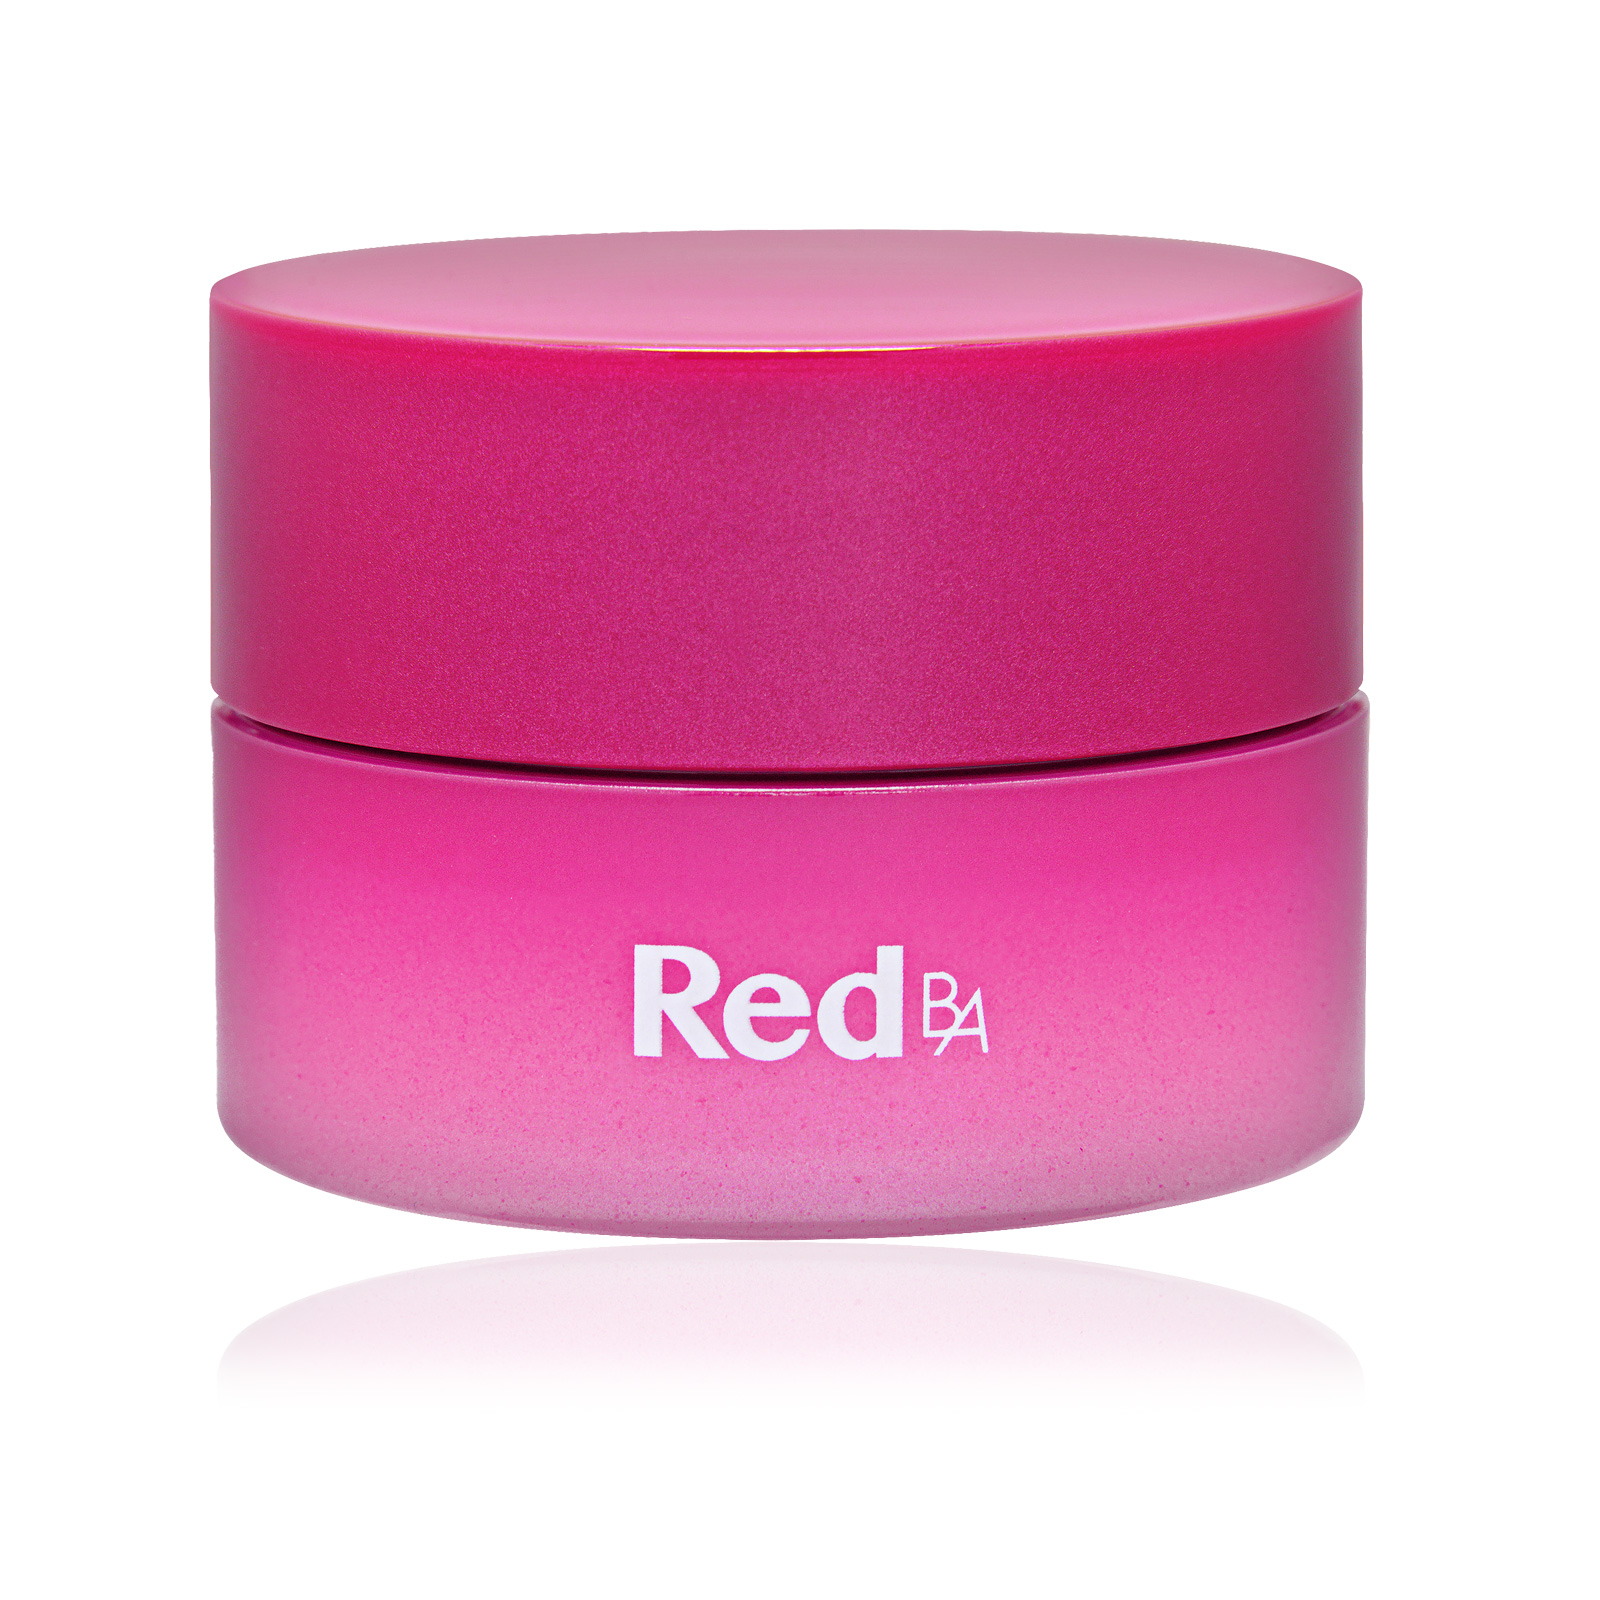 Red B.A Multi Concentrate Facial Cream